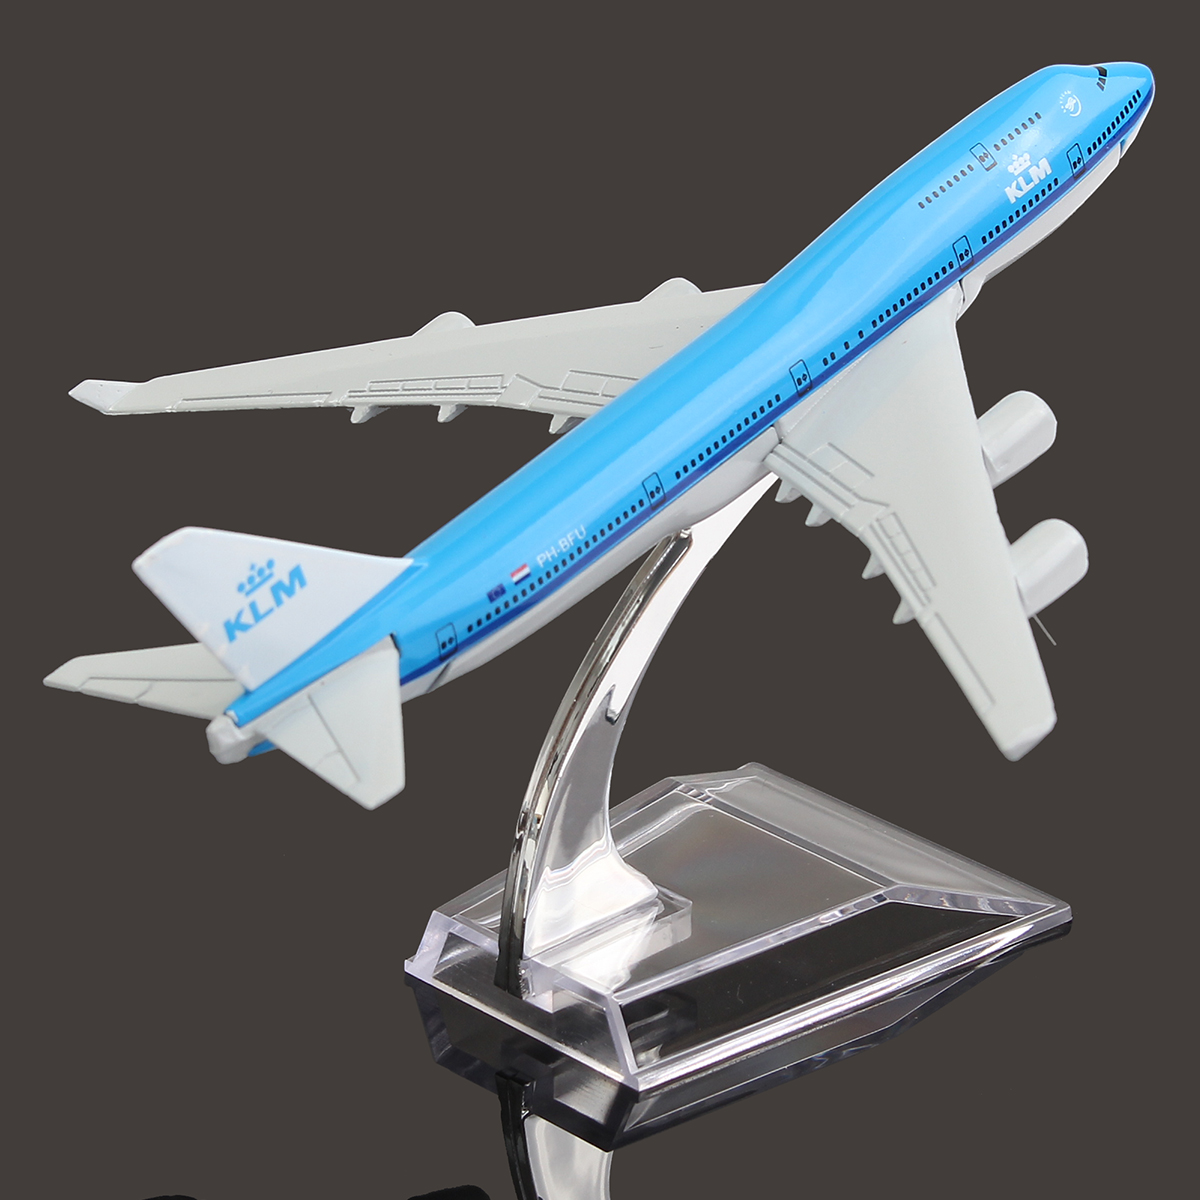 NEW-16cm-Airplane-Metal-Plane-Model-Aircraft-B747-KLM-Aeroplane-Scale-Airplane-Desk-Toy-1102722-4